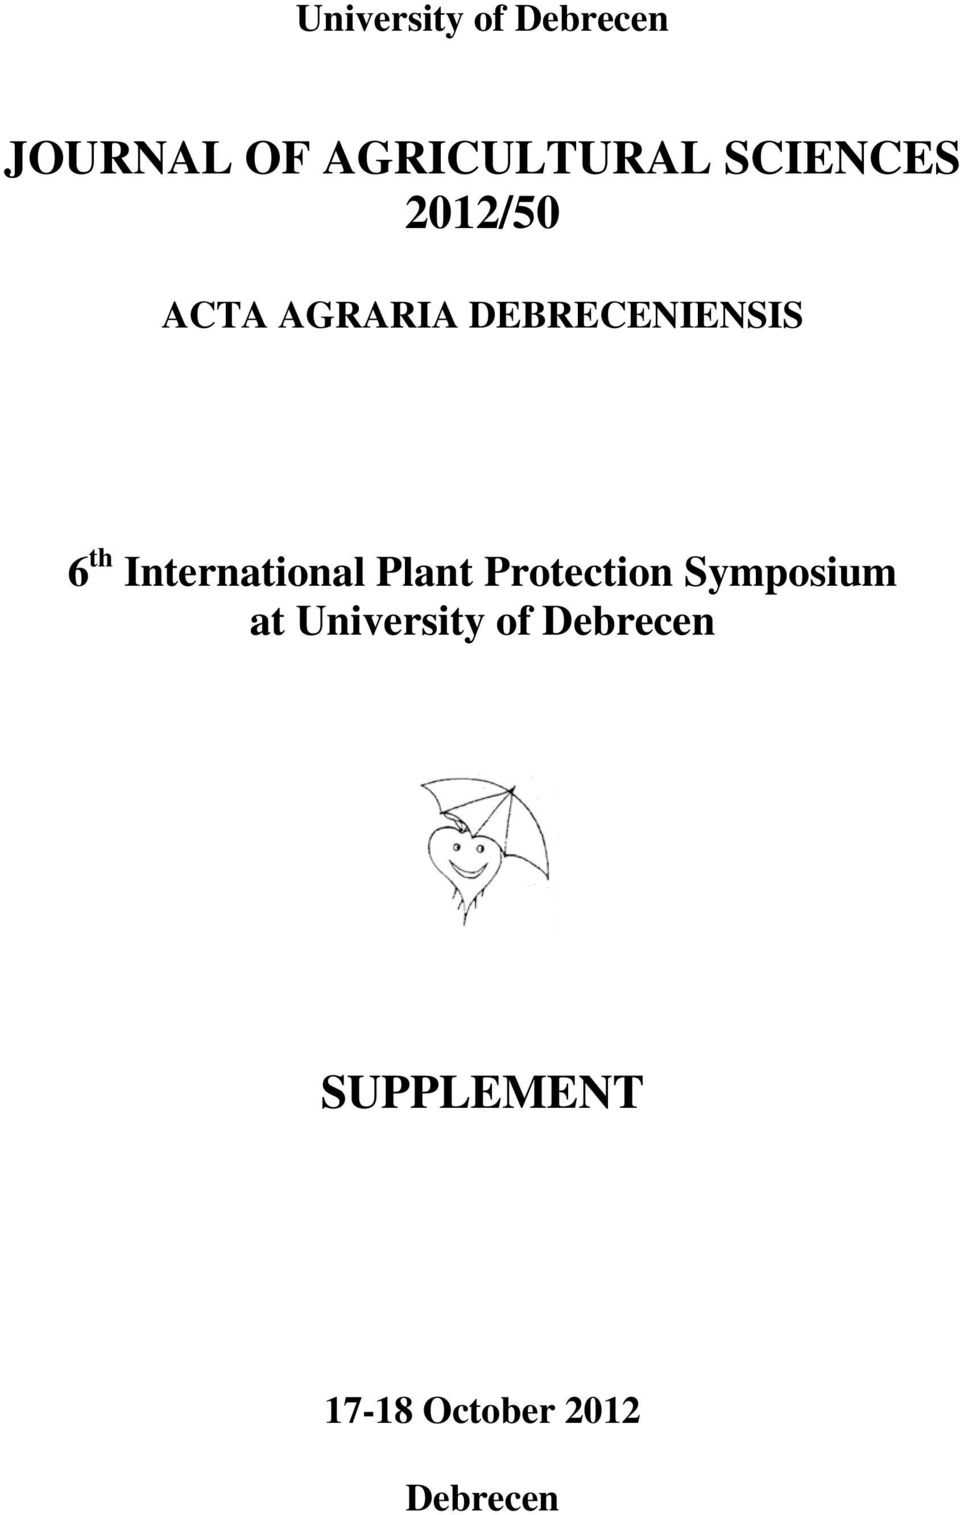 International Plant Protection Symposium at